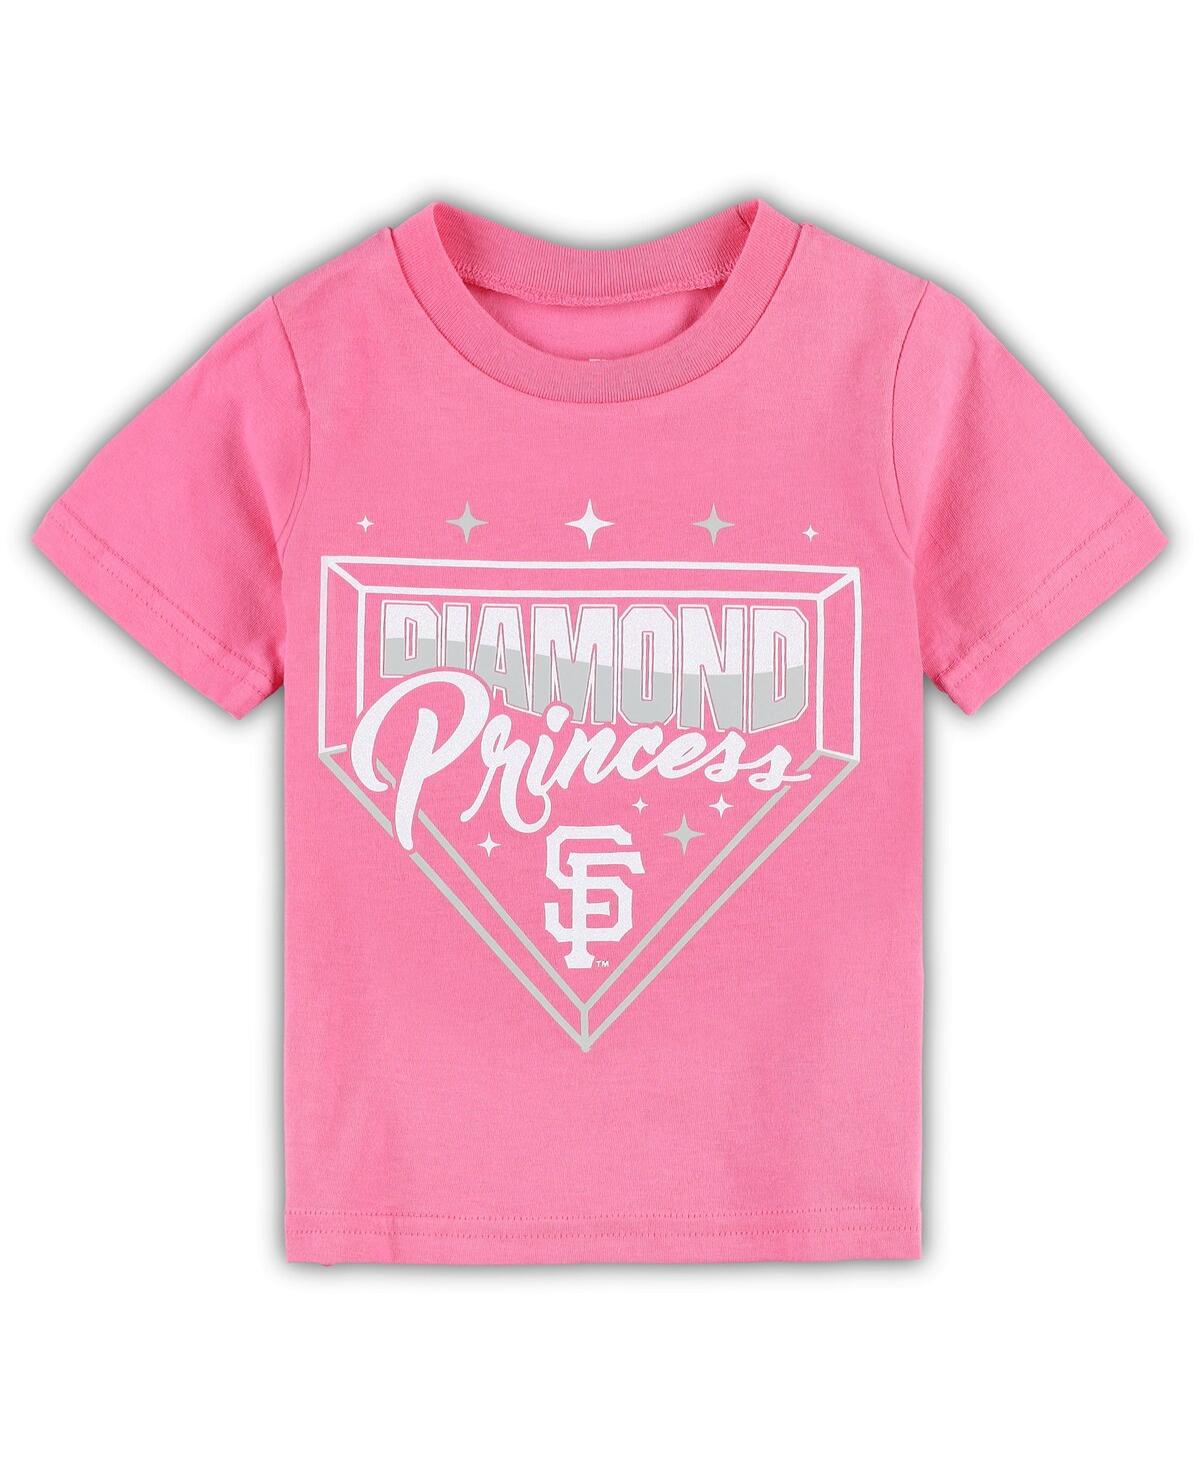 Outerstuff Babies' Toddler Girls Pink Houston Astros Diamond Princess T-shirt